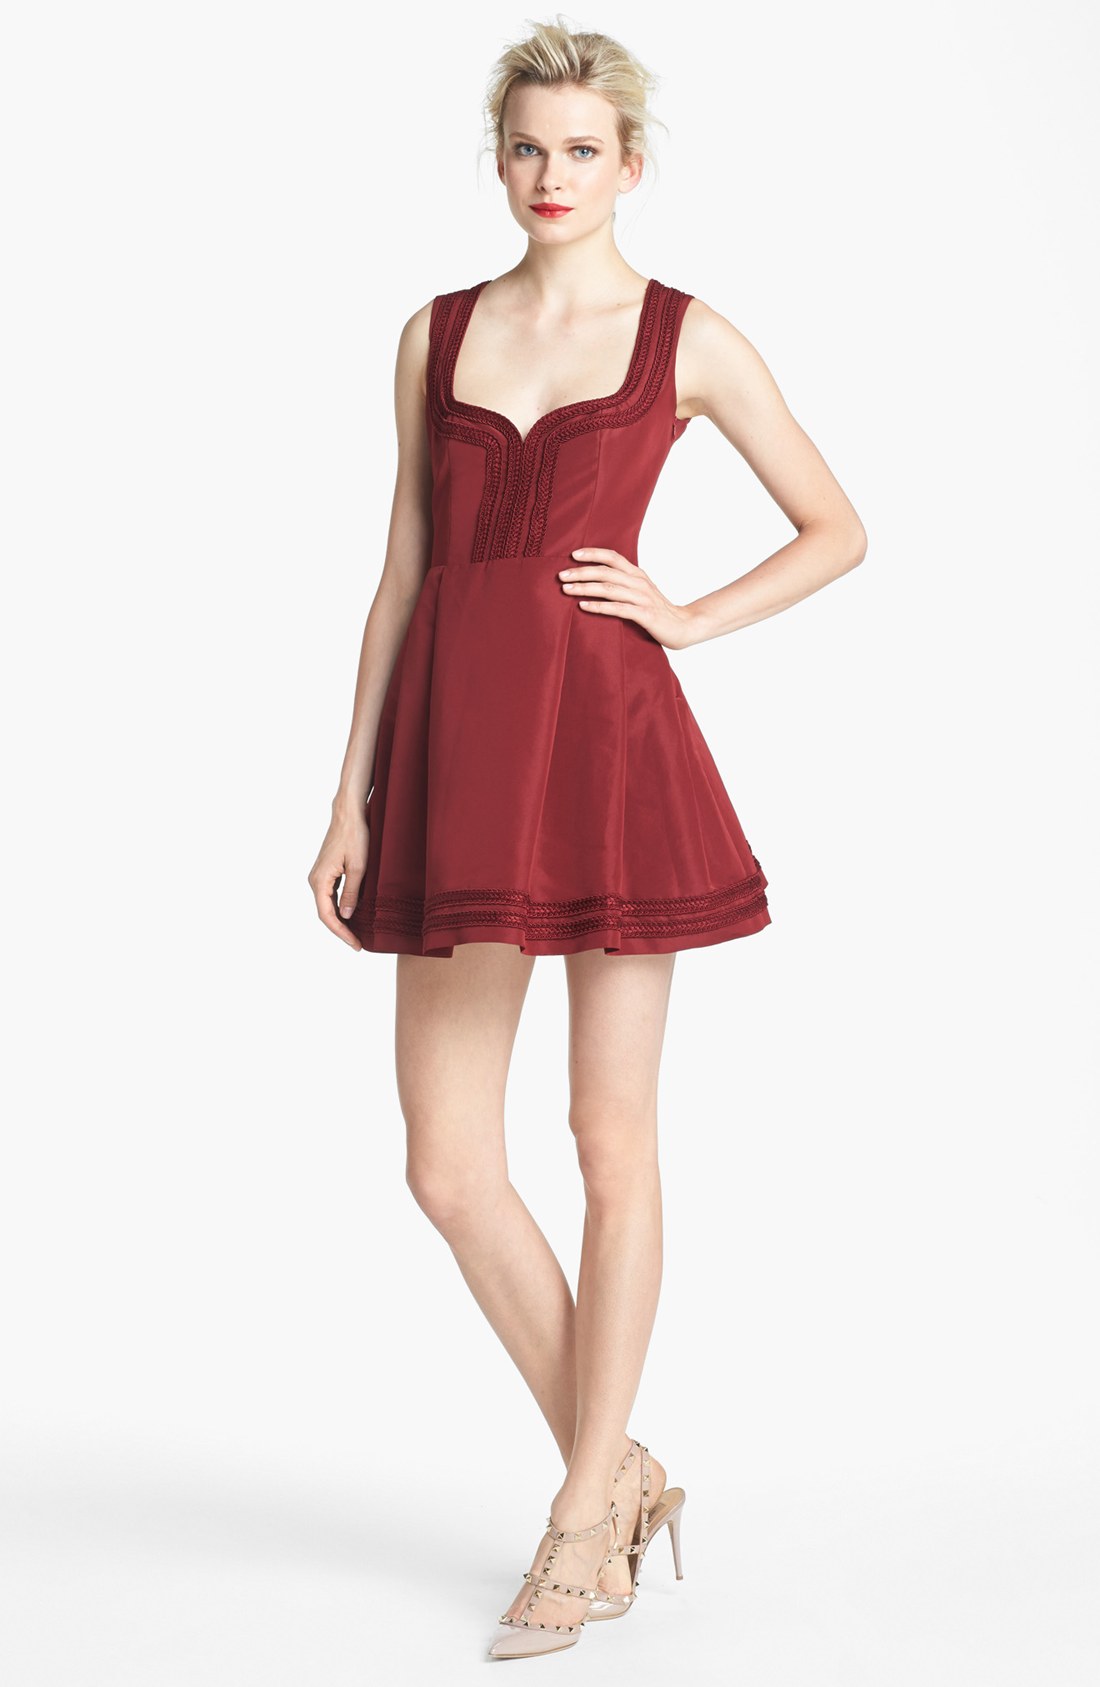 Red Dress Sleeveless & A Wonderful Start